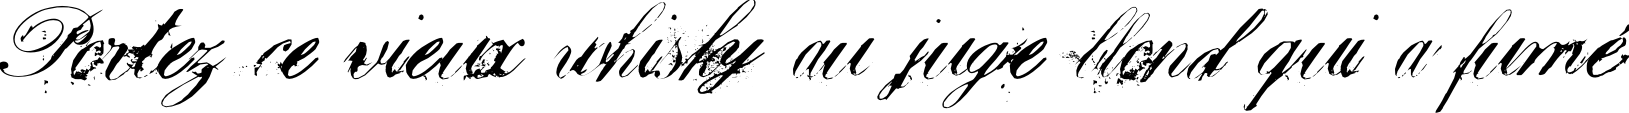 Пример написания шрифтом ChatoBand текста на французском